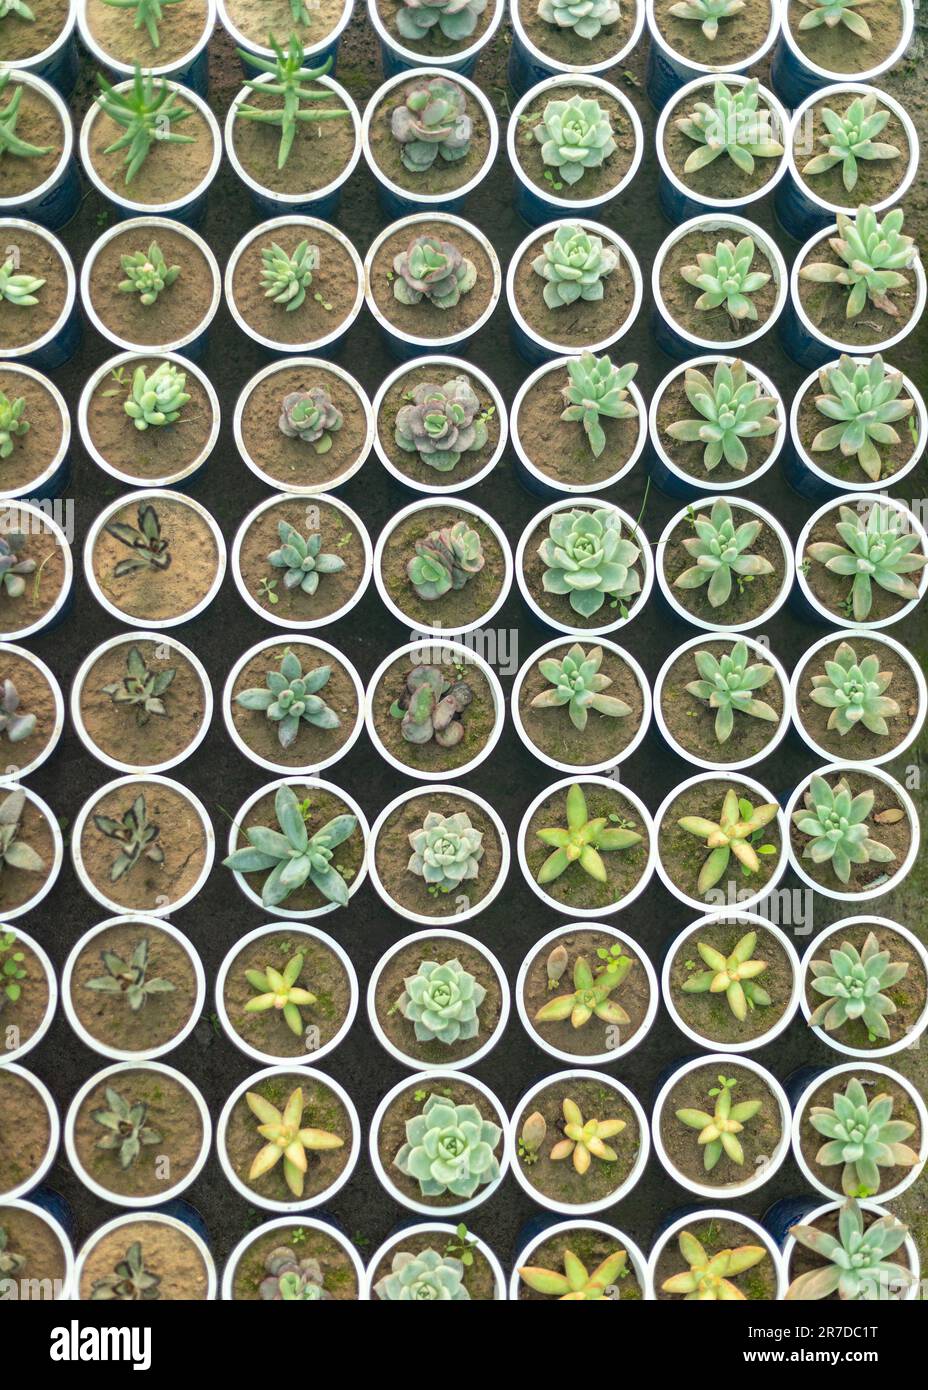 Succulent propagation in small plastic pots. Top view Stock Photo